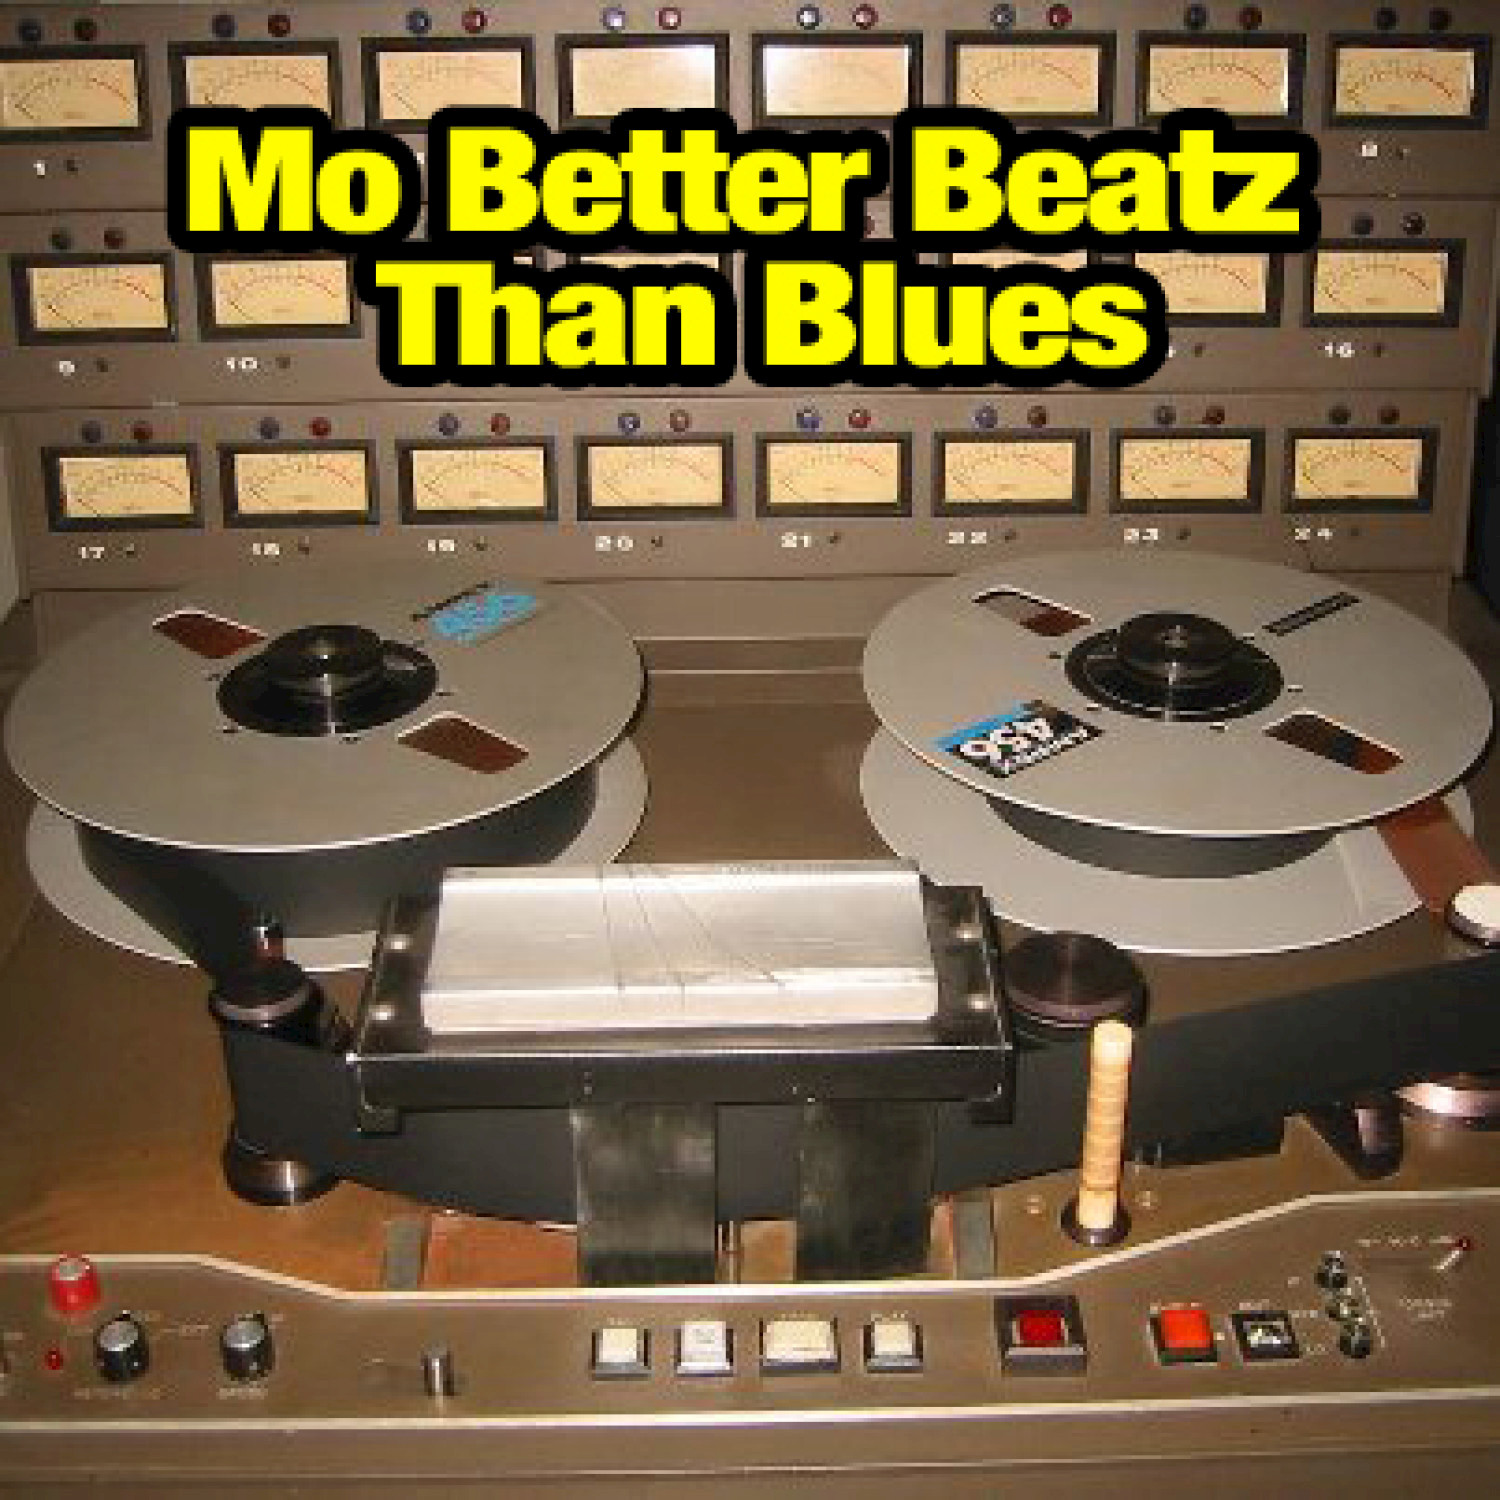 Mo Better Beatz Than Blues